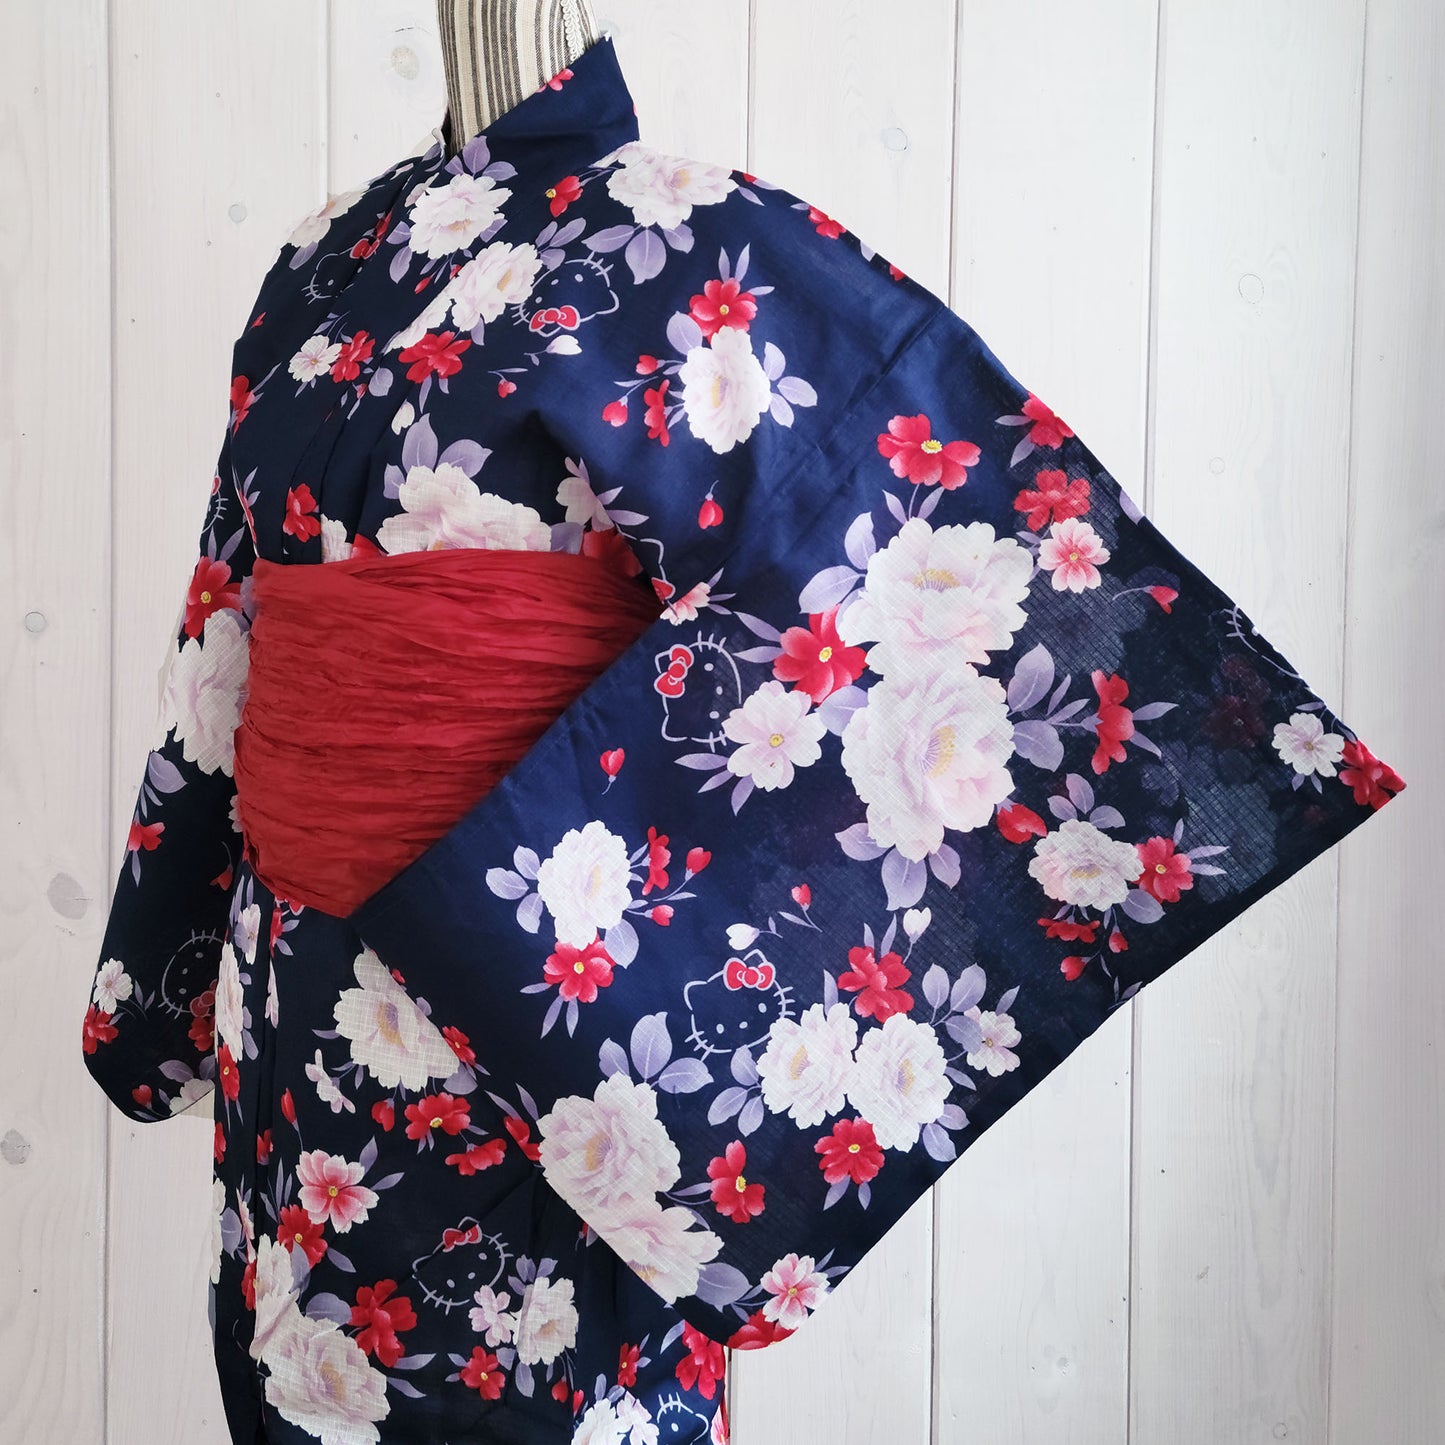 Women's Japanese Traditional Yukata Kimono - Hello Kitty and Peonies in Dark Blue